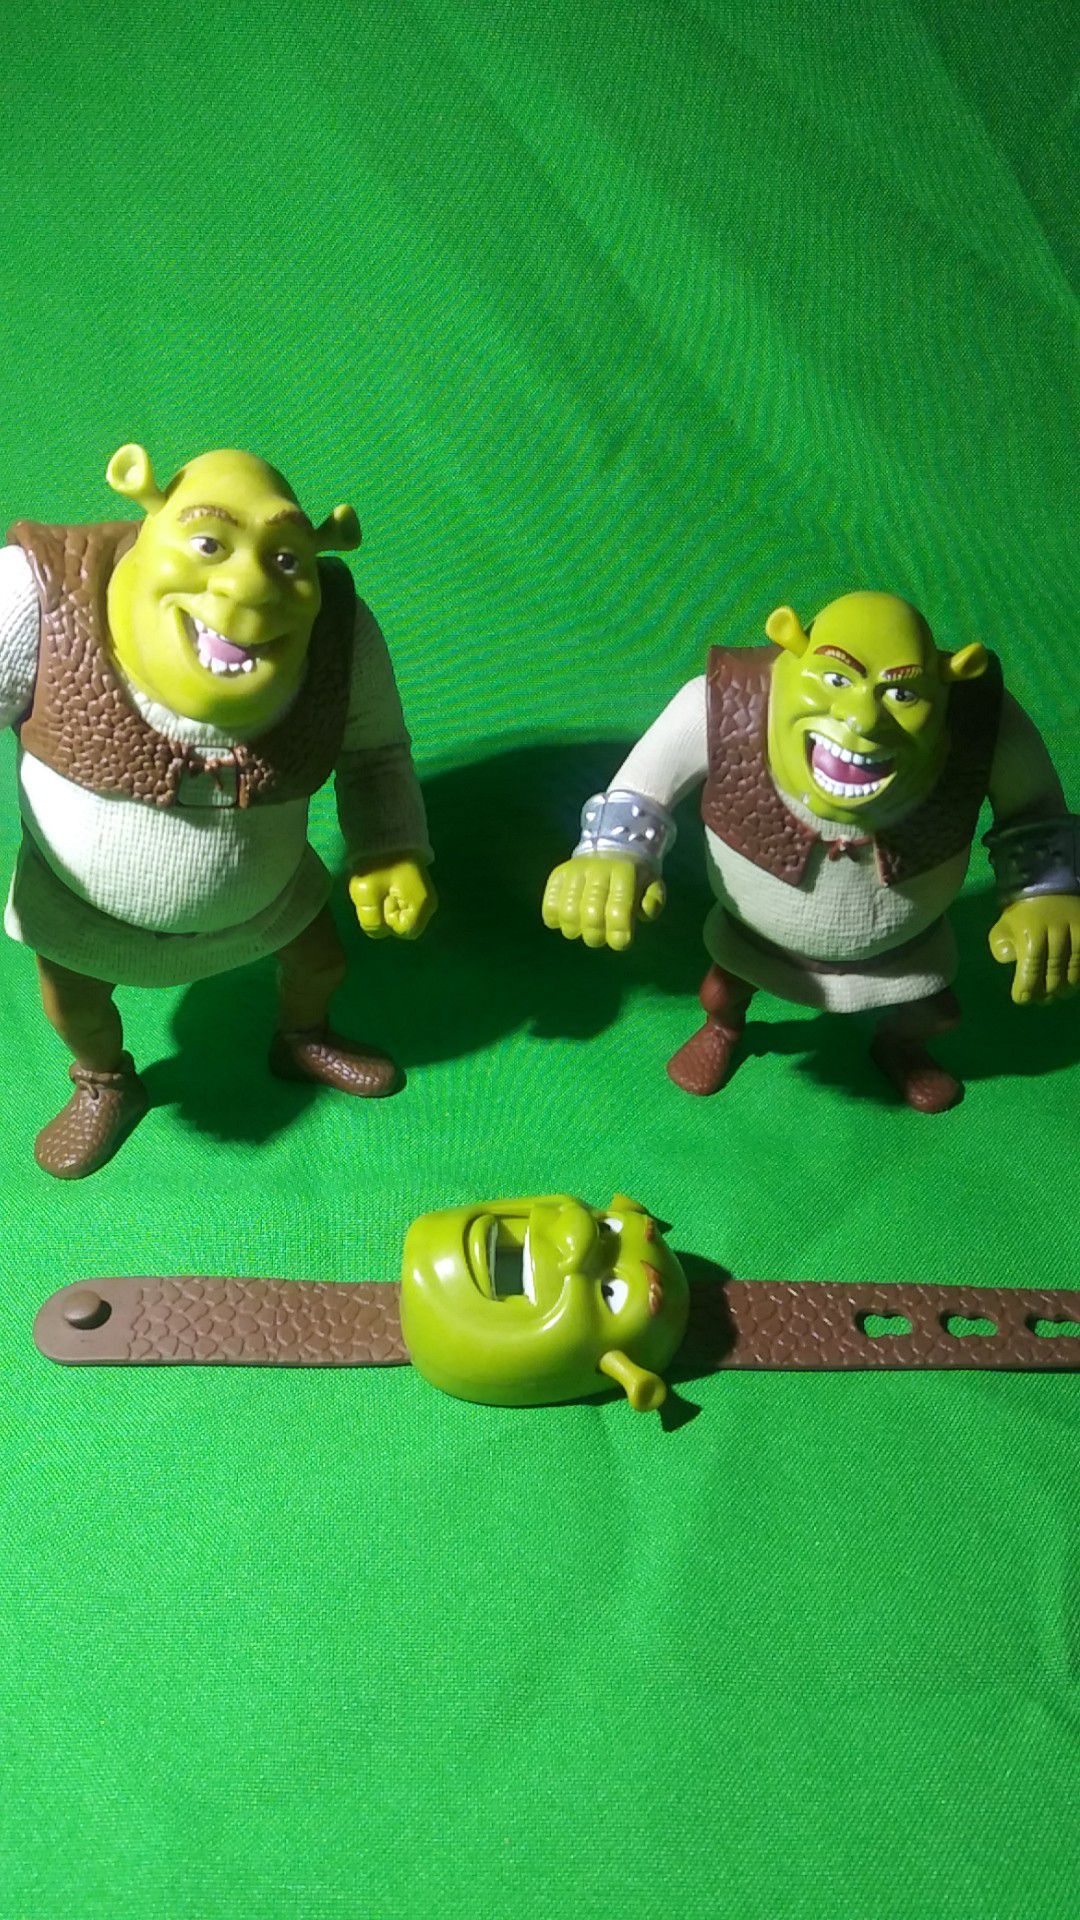 Shrek collectables